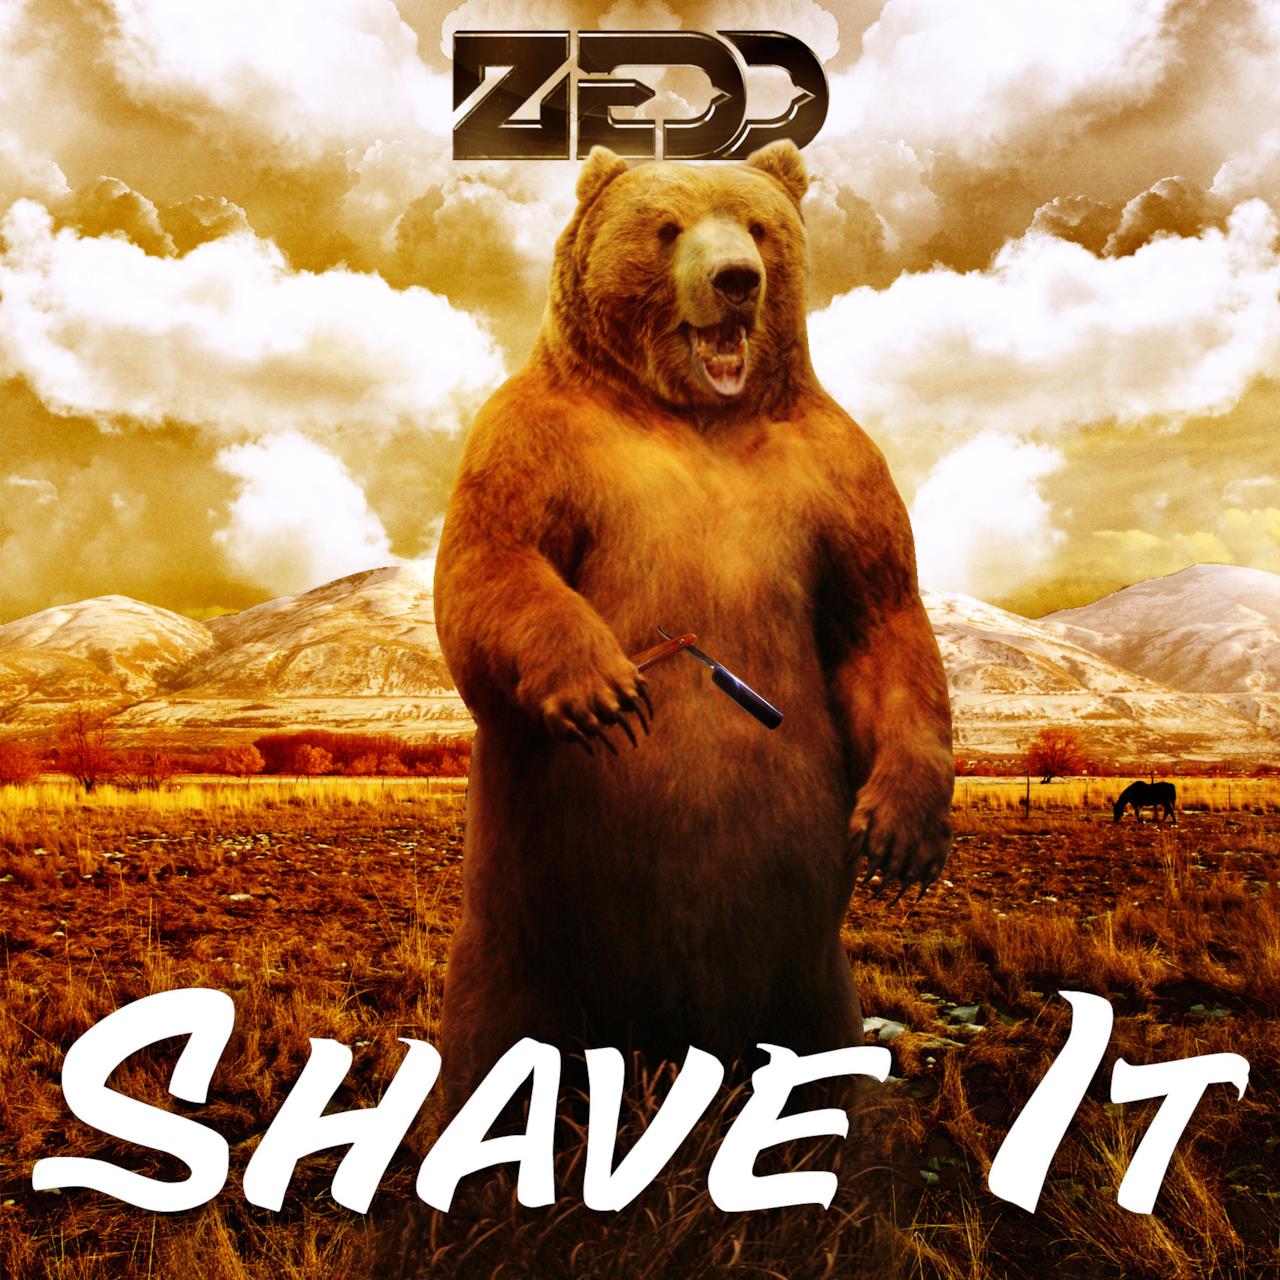 Zedd - Shave it